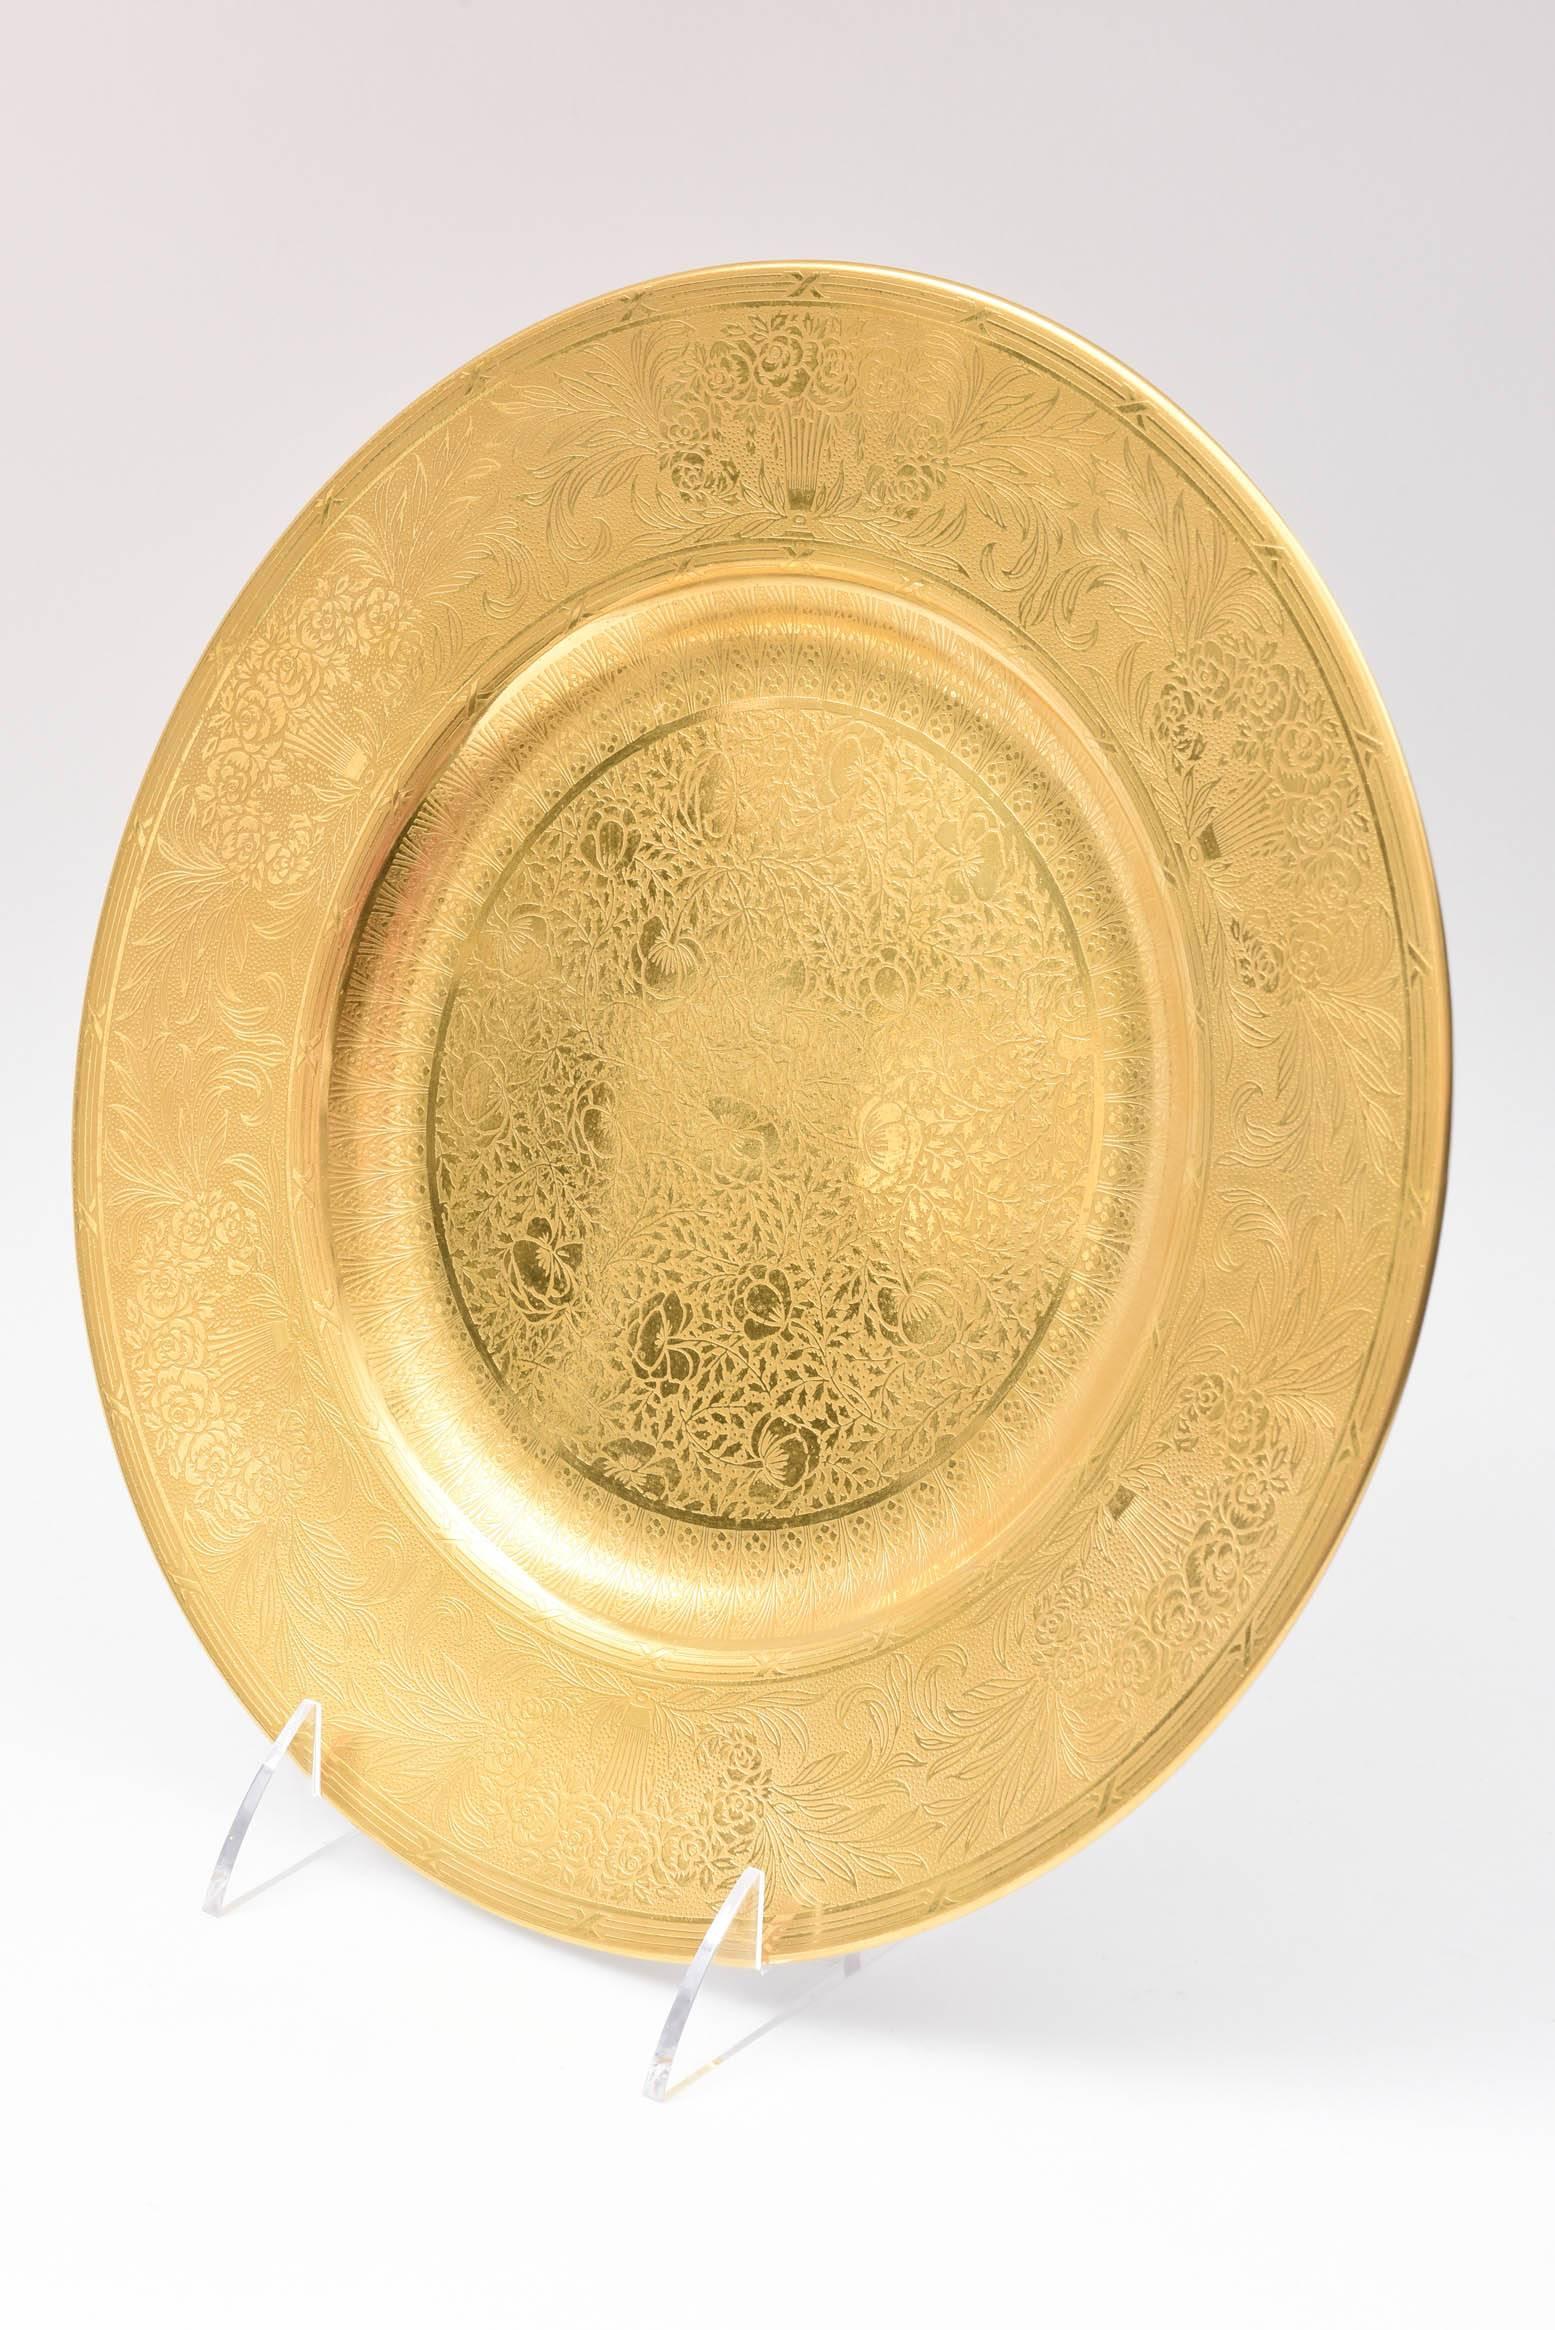 Eight Gilt Encrusted Presentation Plates, Minton, England with 24-Karat Gold 4